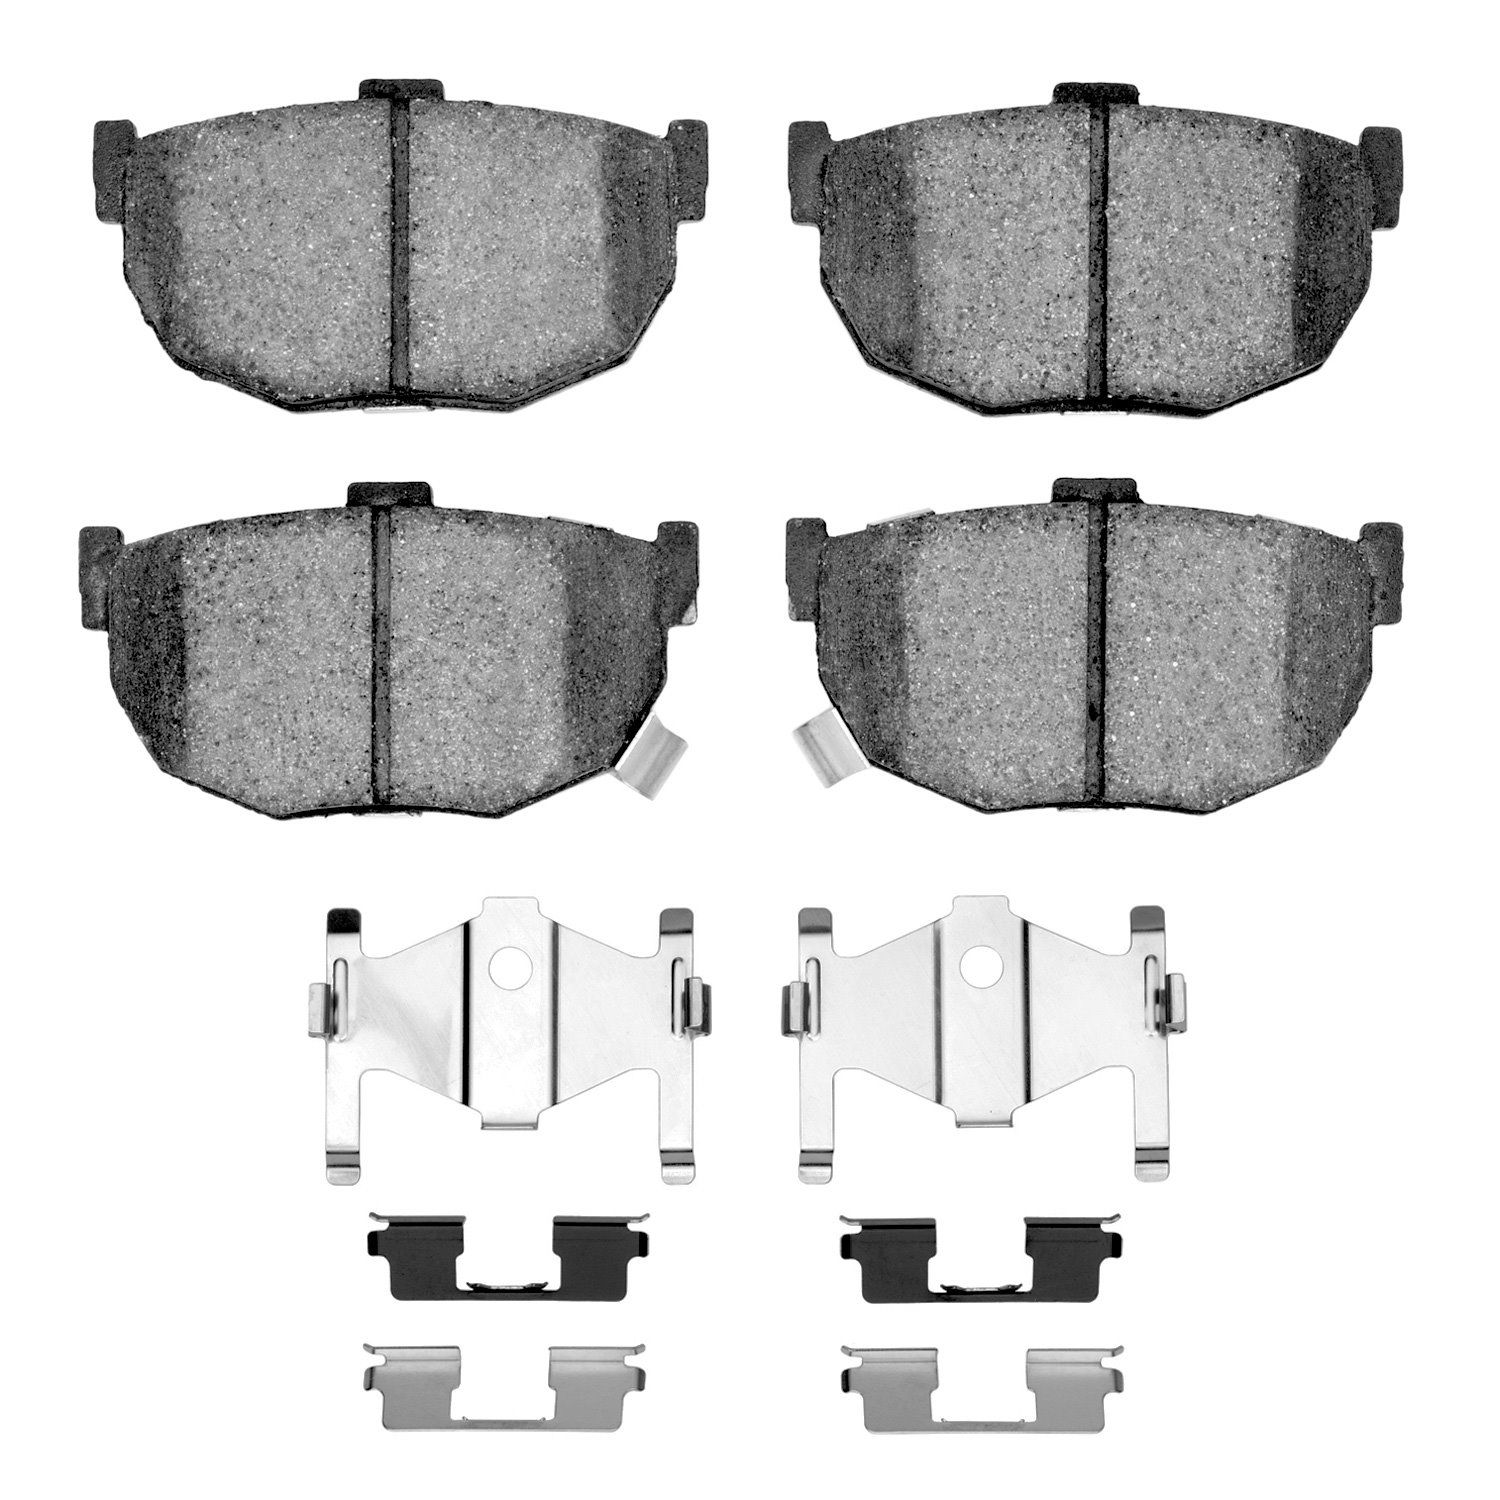 1551-0323-01 5000 Advanced Ceramic Brake Pads & Hardware Kit, 1985-2009 Multiple Makes/Models, Position: Rear